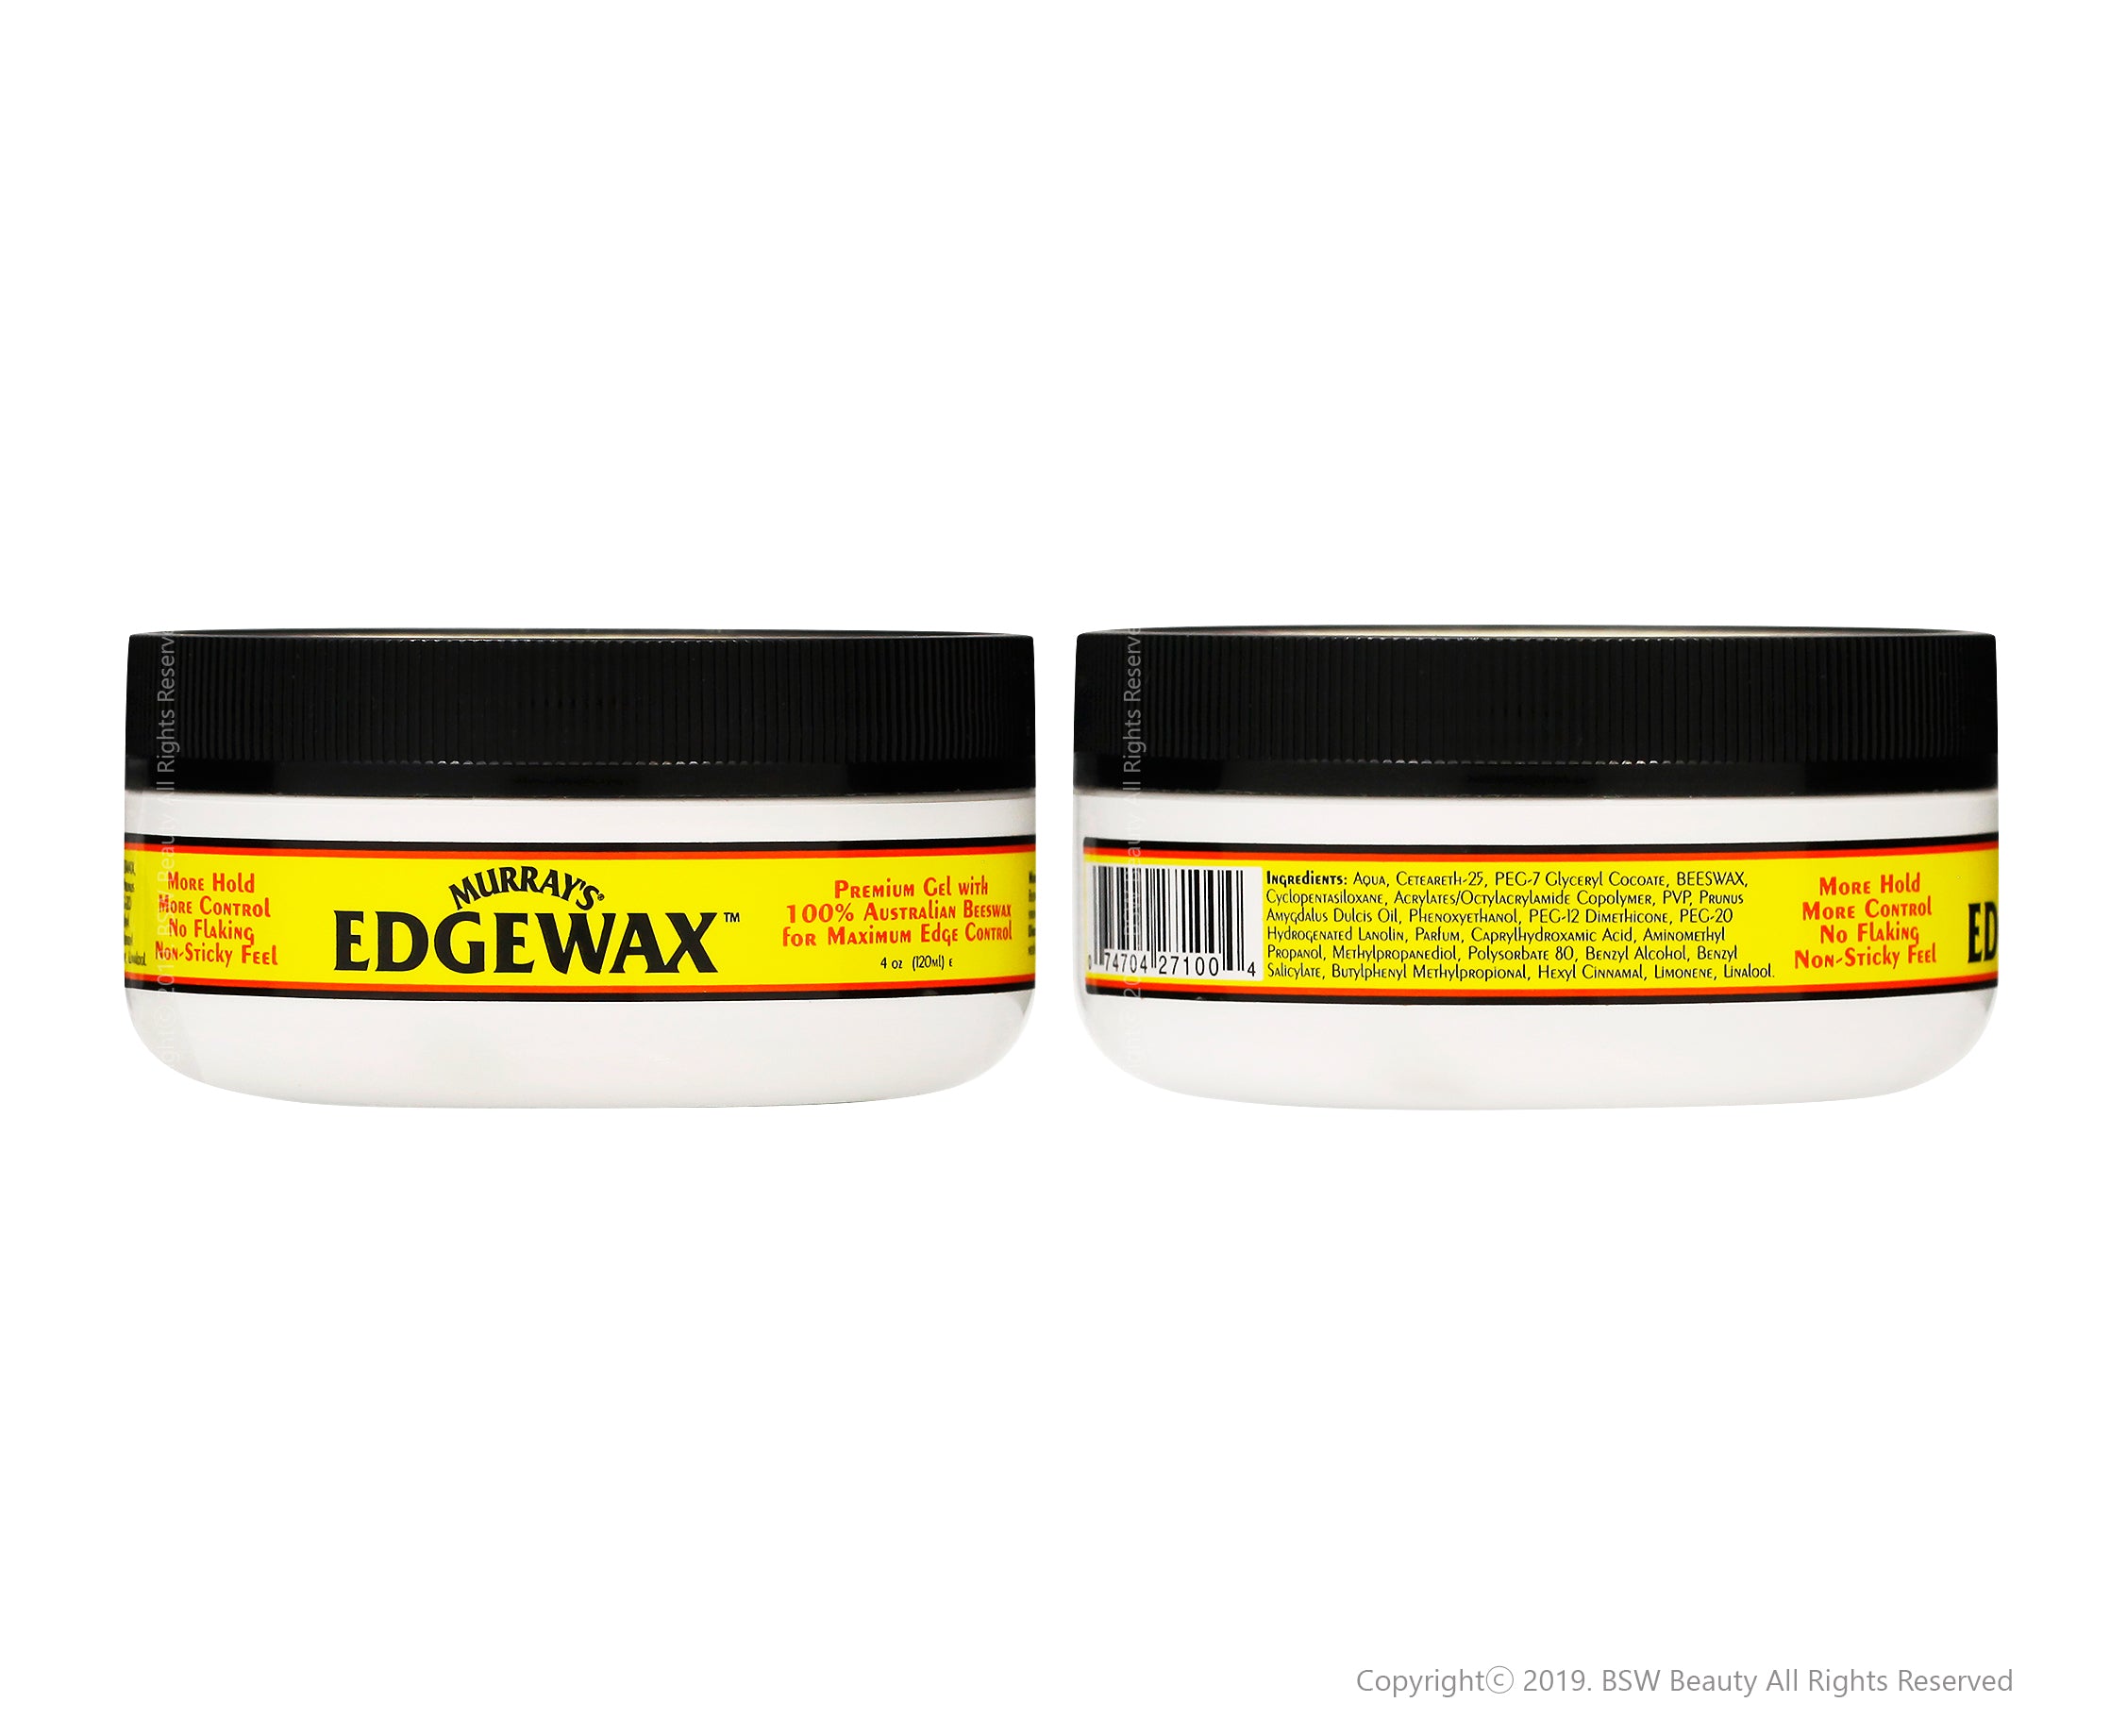 Murray's Edgewax Extreme Hold Premium Gel 4oz — Vip Barber Supply